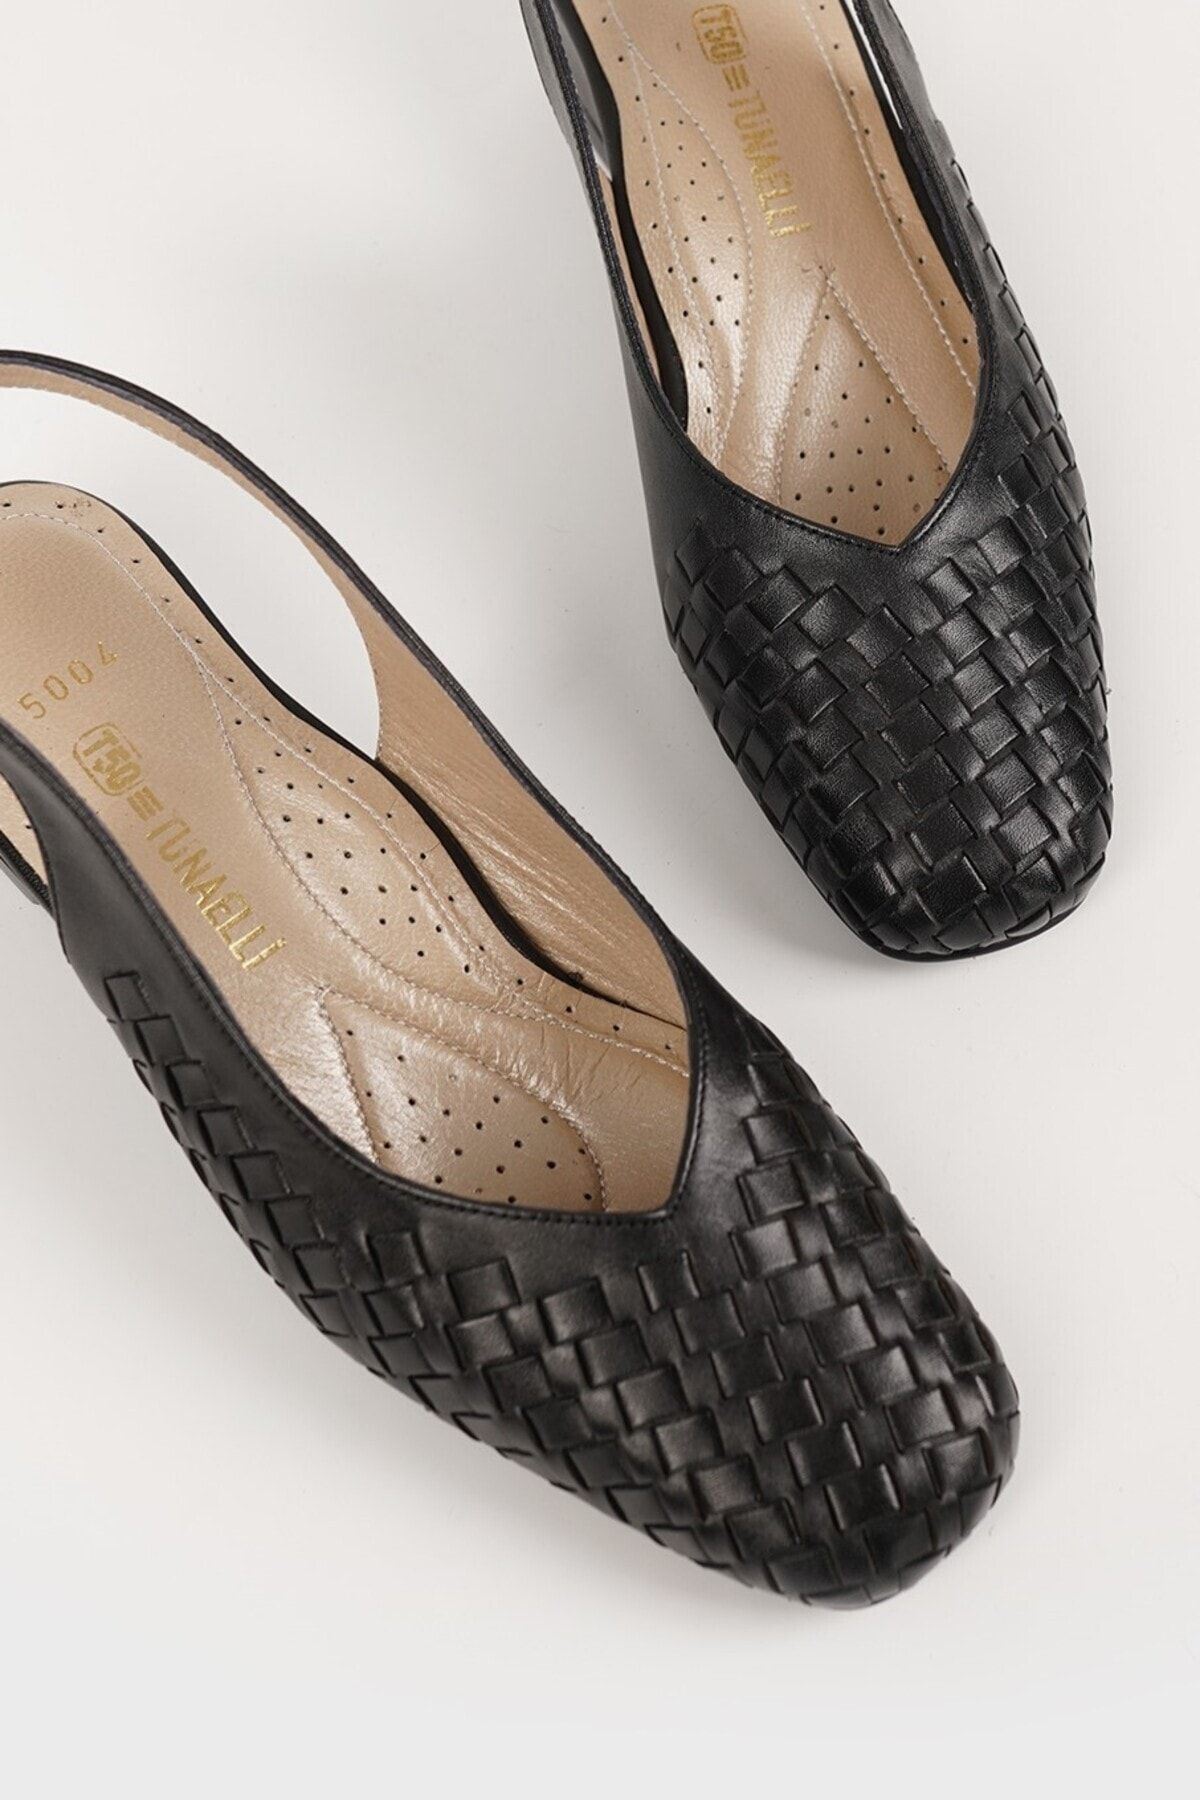 TUNAELLİ کفش های چرمی واقعی بافته سیاه با پاشنه بلند ، اندازه 35-41-42